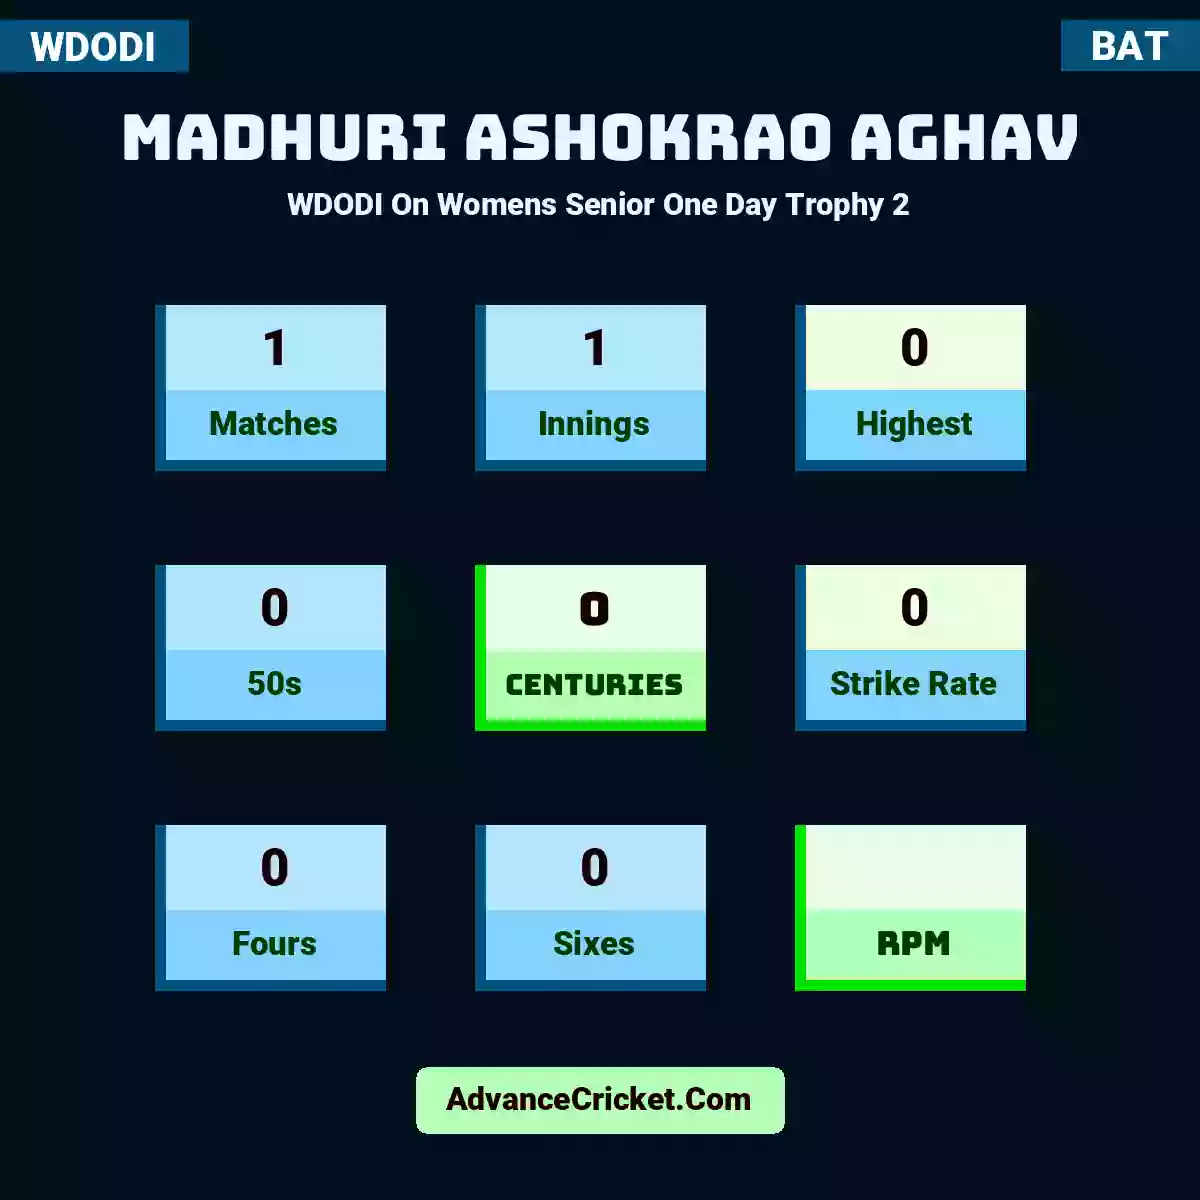 Madhuri Ashokrao Aghav WDODI  On Womens Senior One Day Trophy 2, Madhuri Ashokrao Aghav played 1 matches, scored 0 runs as highest, 0 half-centuries, and 0 centuries, with a strike rate of 0. M.Ashokrao.Aghav hit 0 fours and 0 sixes.